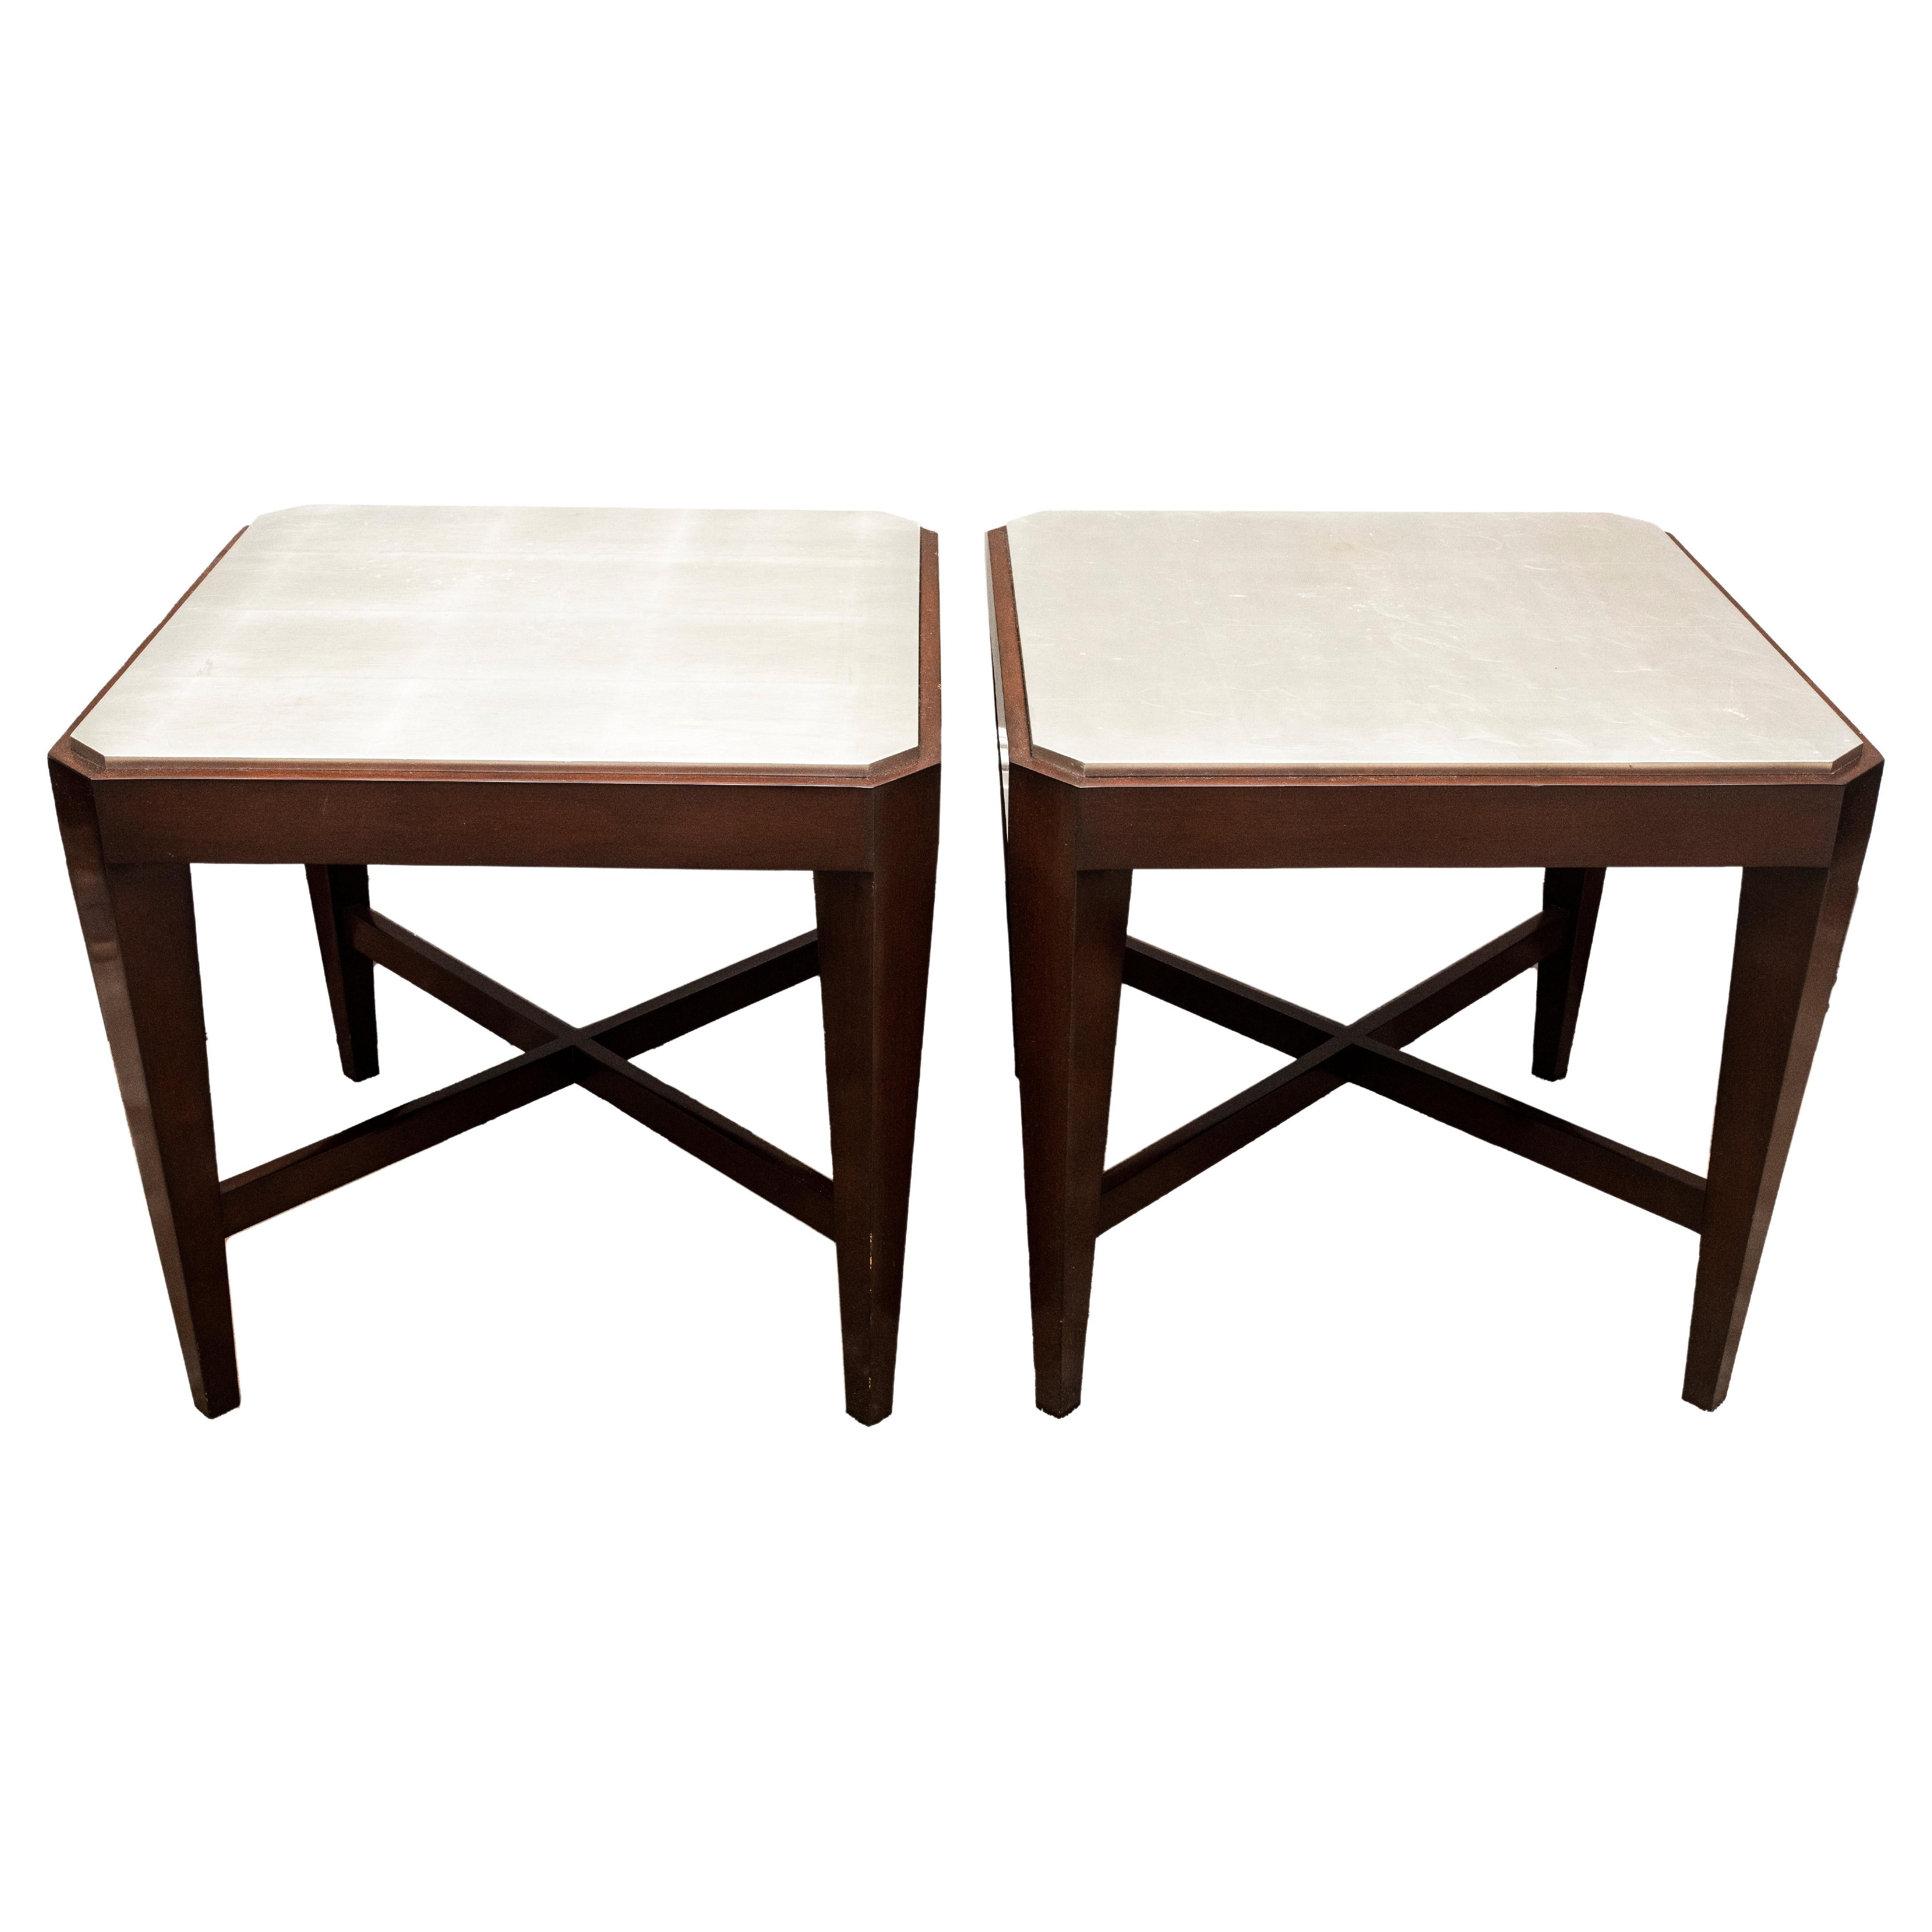 Pair of Modern Art Deco Revival Side Tables